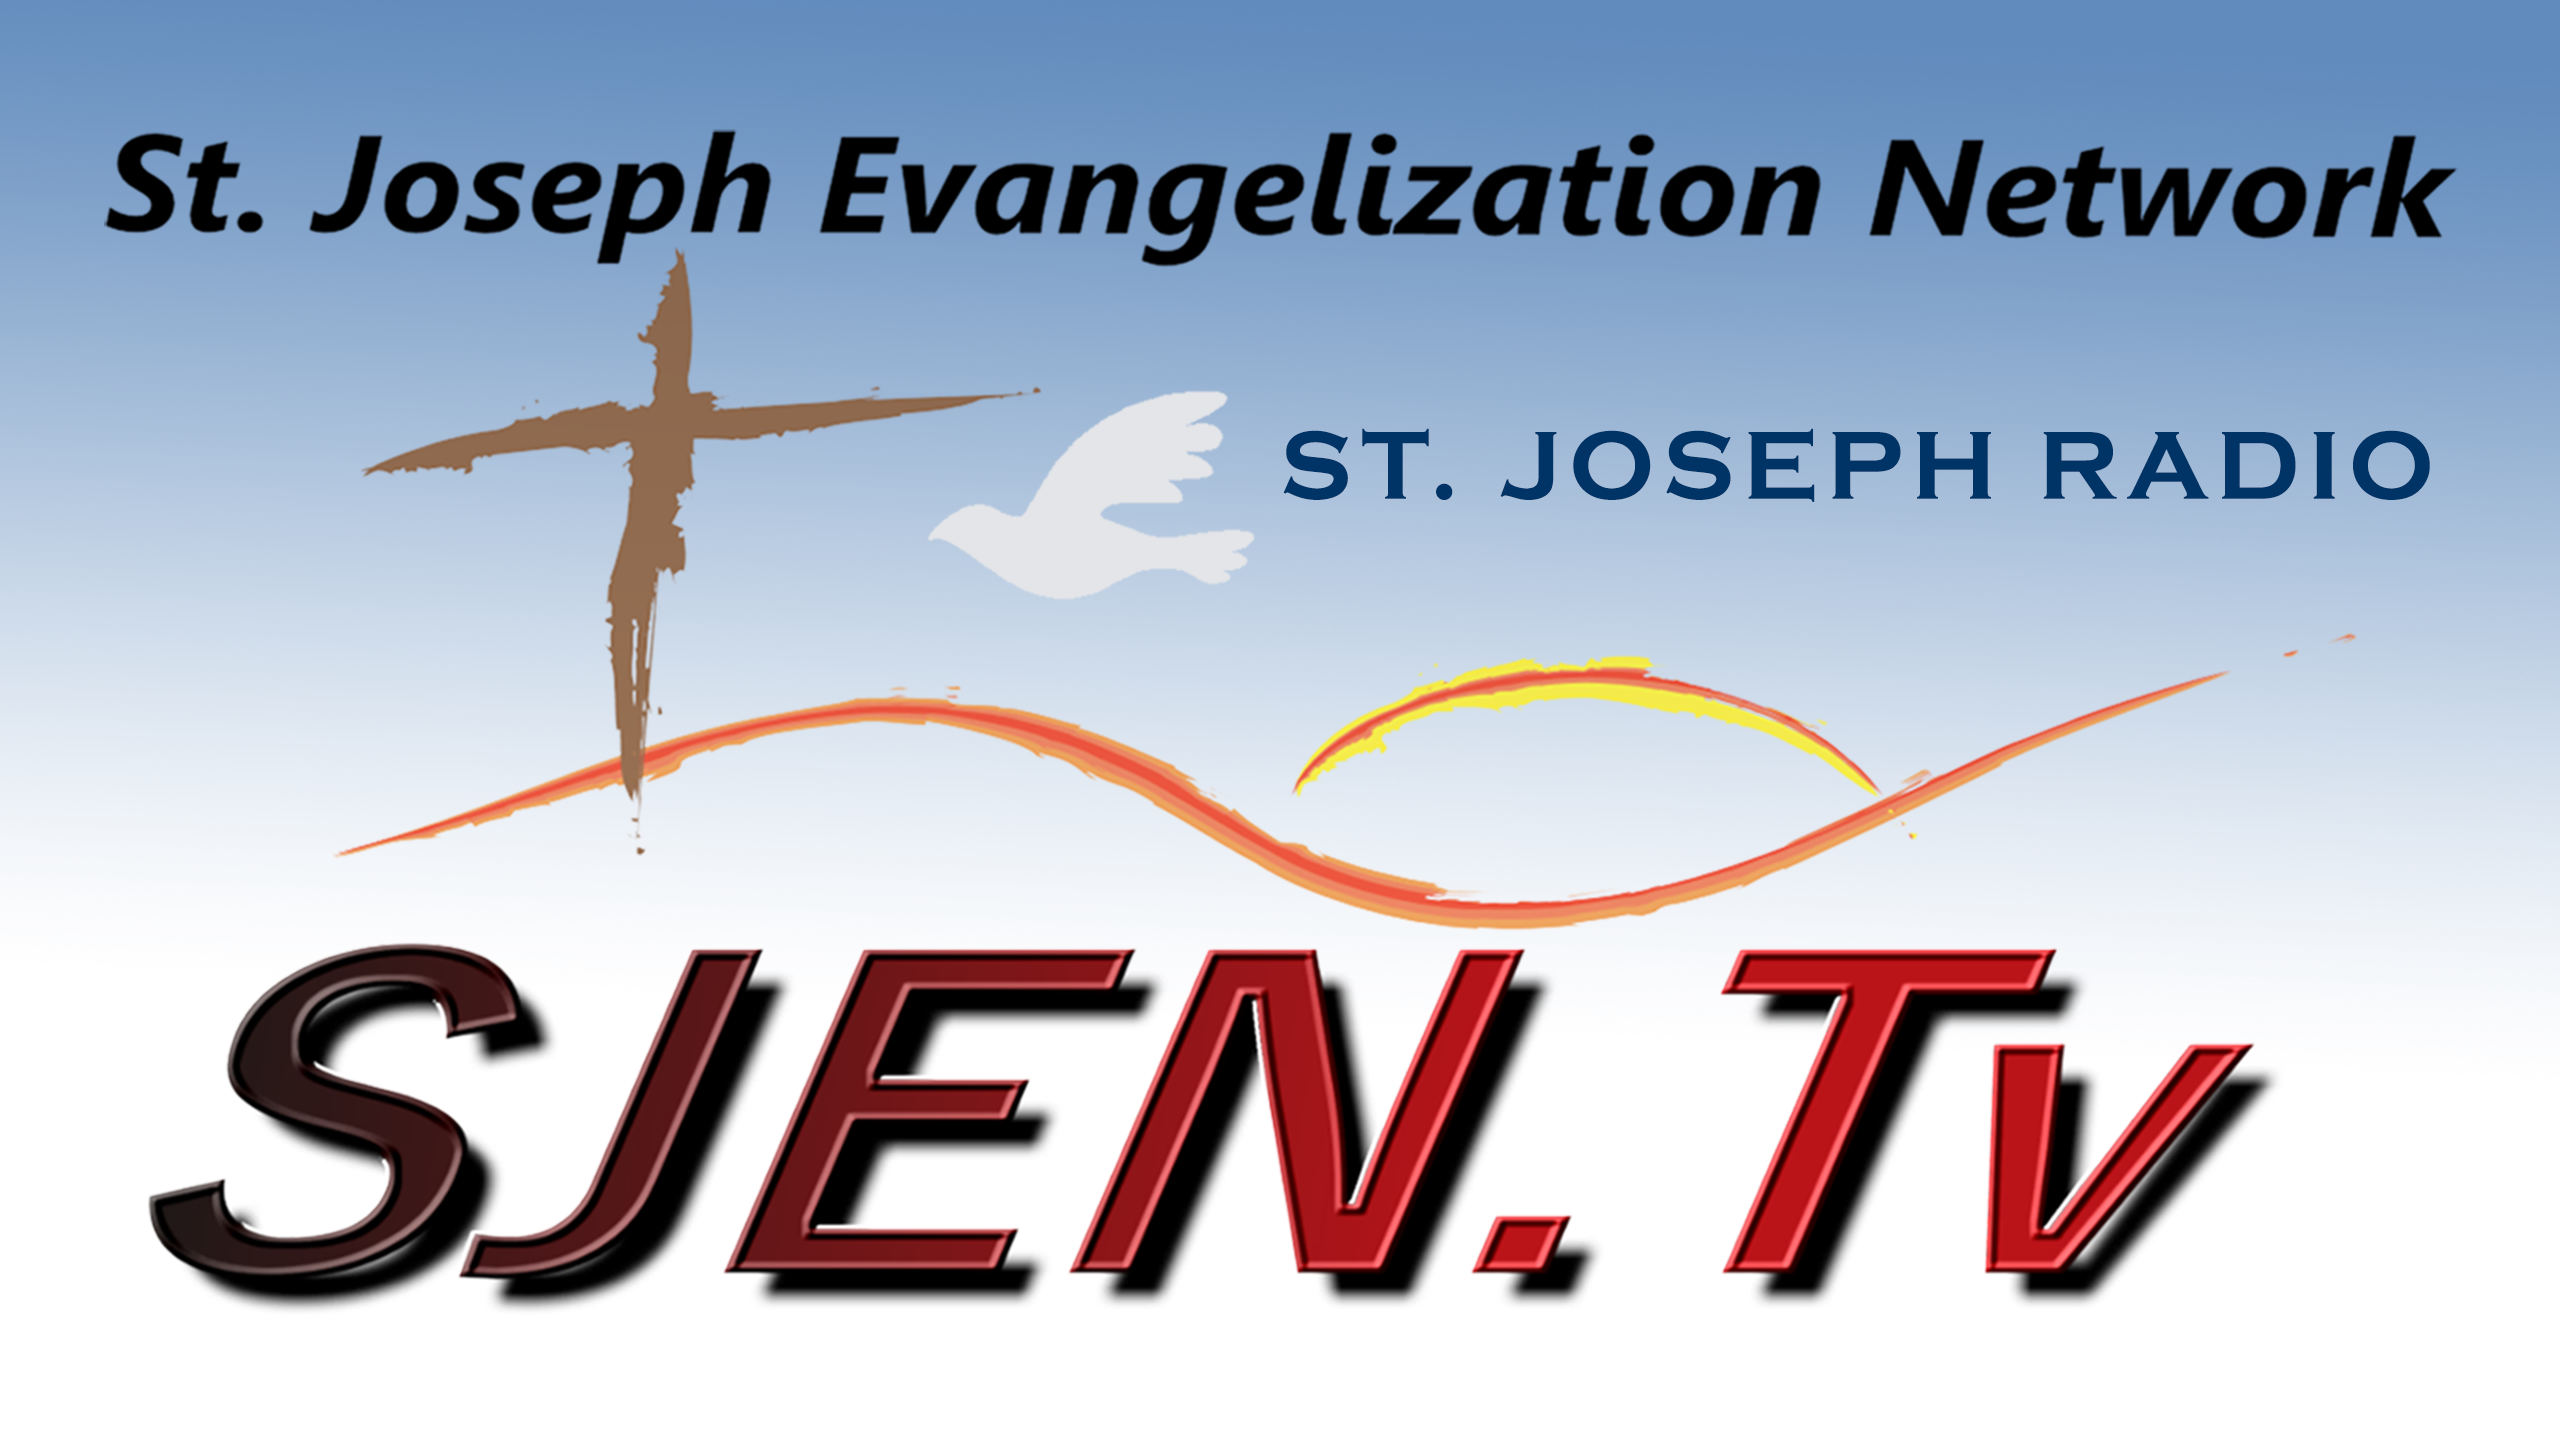 St. Joseph Evangelization Network Podcast